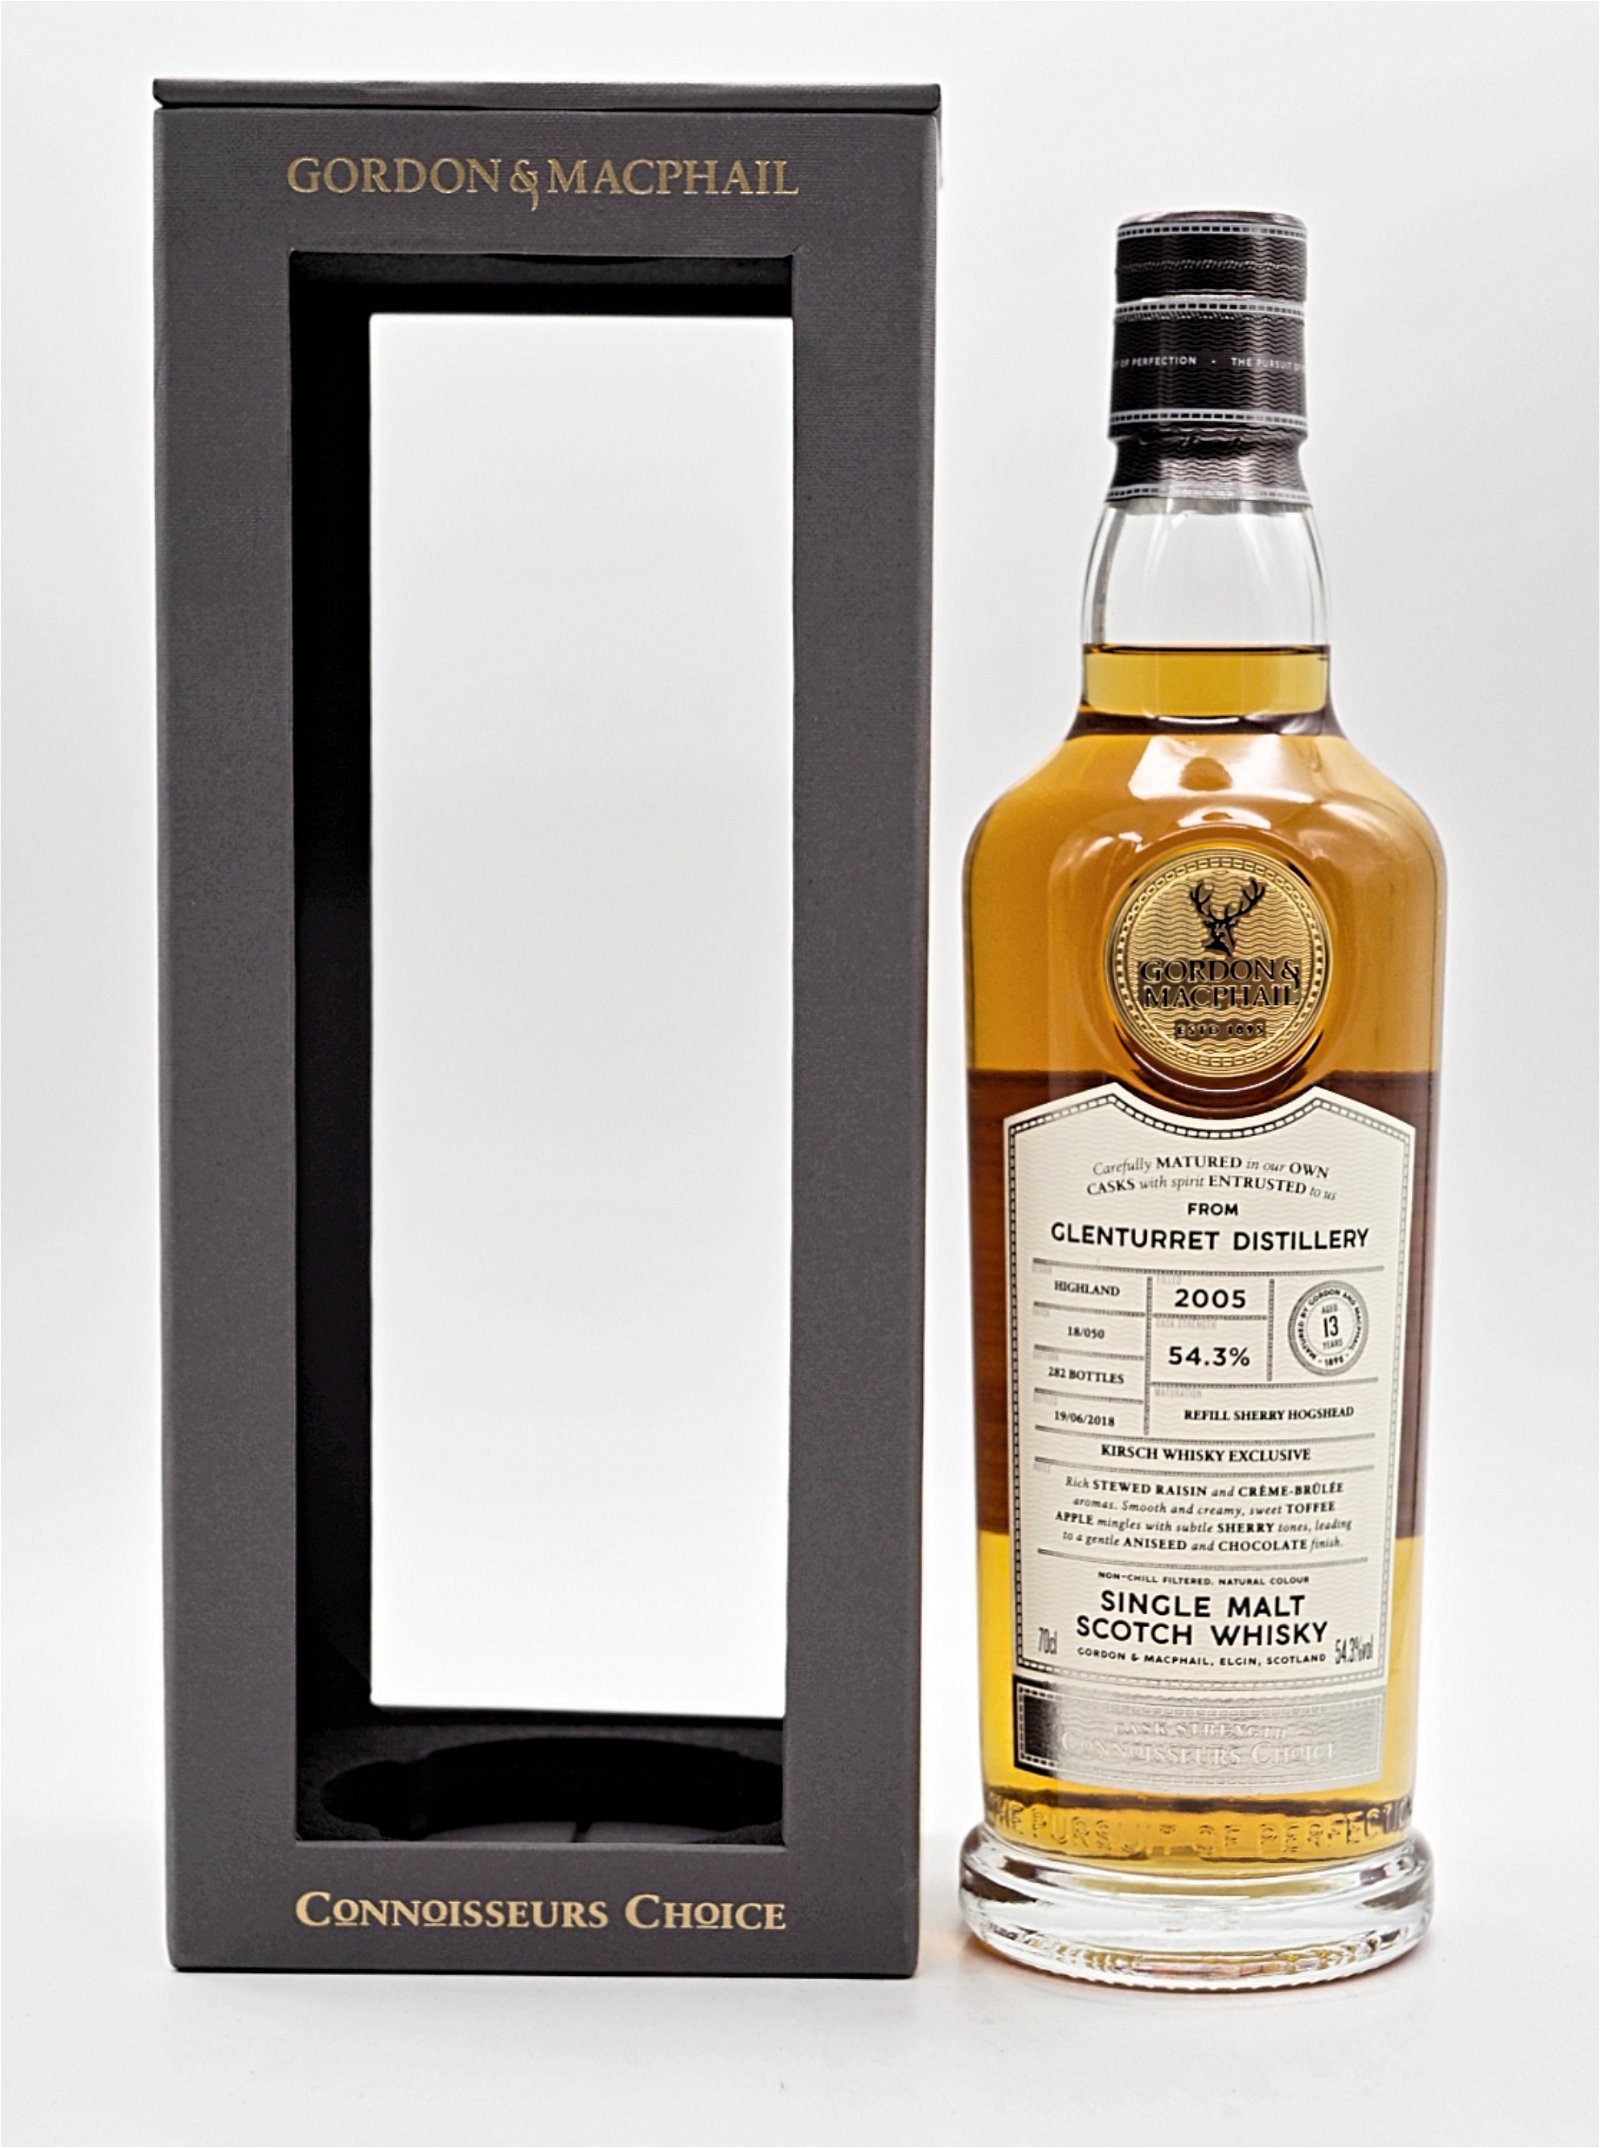 Gordon & Macphail Connoisseurs Choice Glenturret Distillery 2005/2018 Cask Strength Highland Single Malt Scotch Whisky